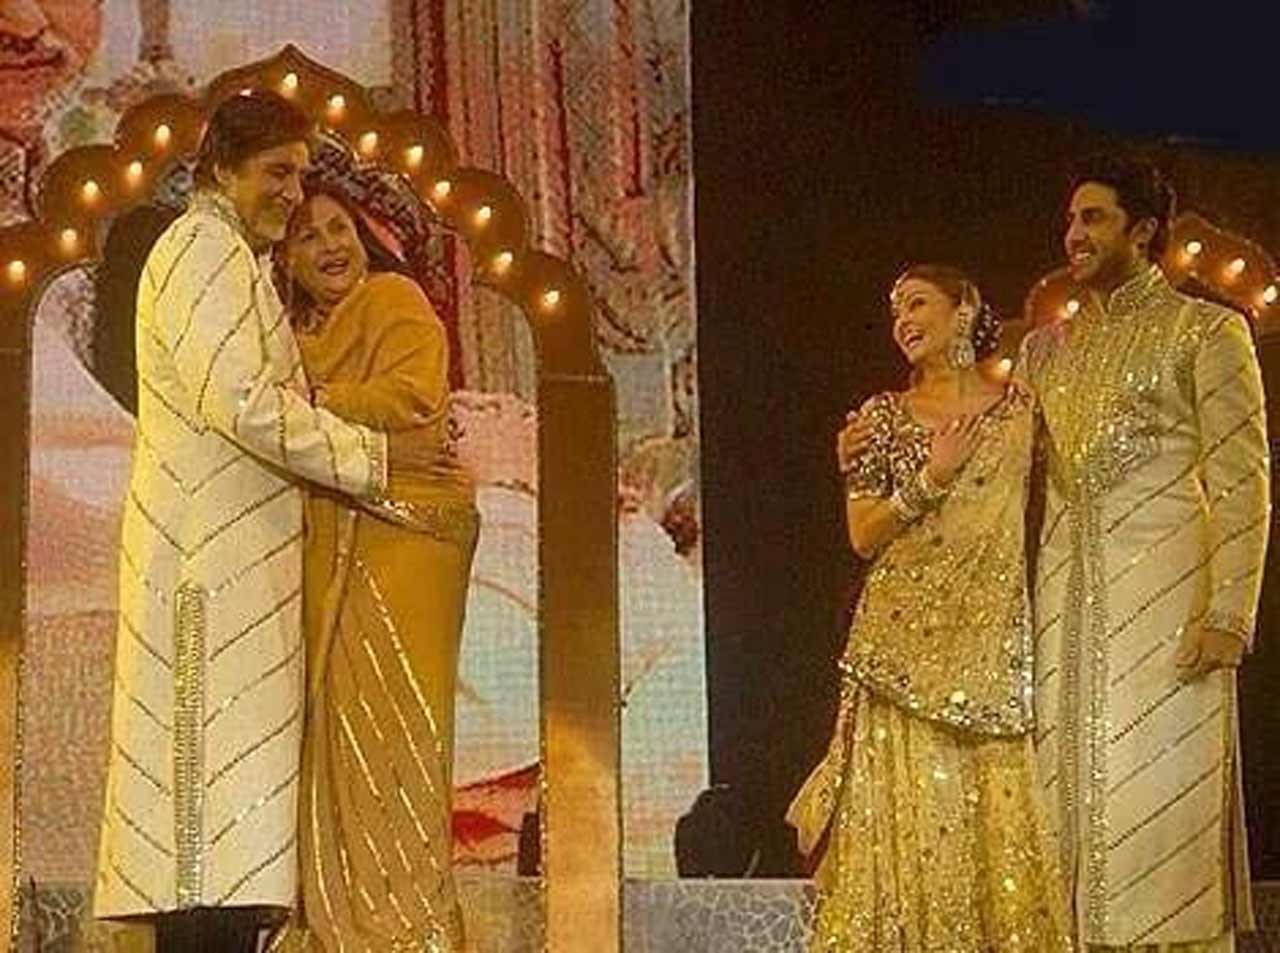 Aishwarya Rai Bachchan and Abhishek Bachchan with Amitabh Bachchan and Jaya Bachchan. The picture was shared on his social media account where Abhishek wished his Maa and Paa a happy wedding anniversary.